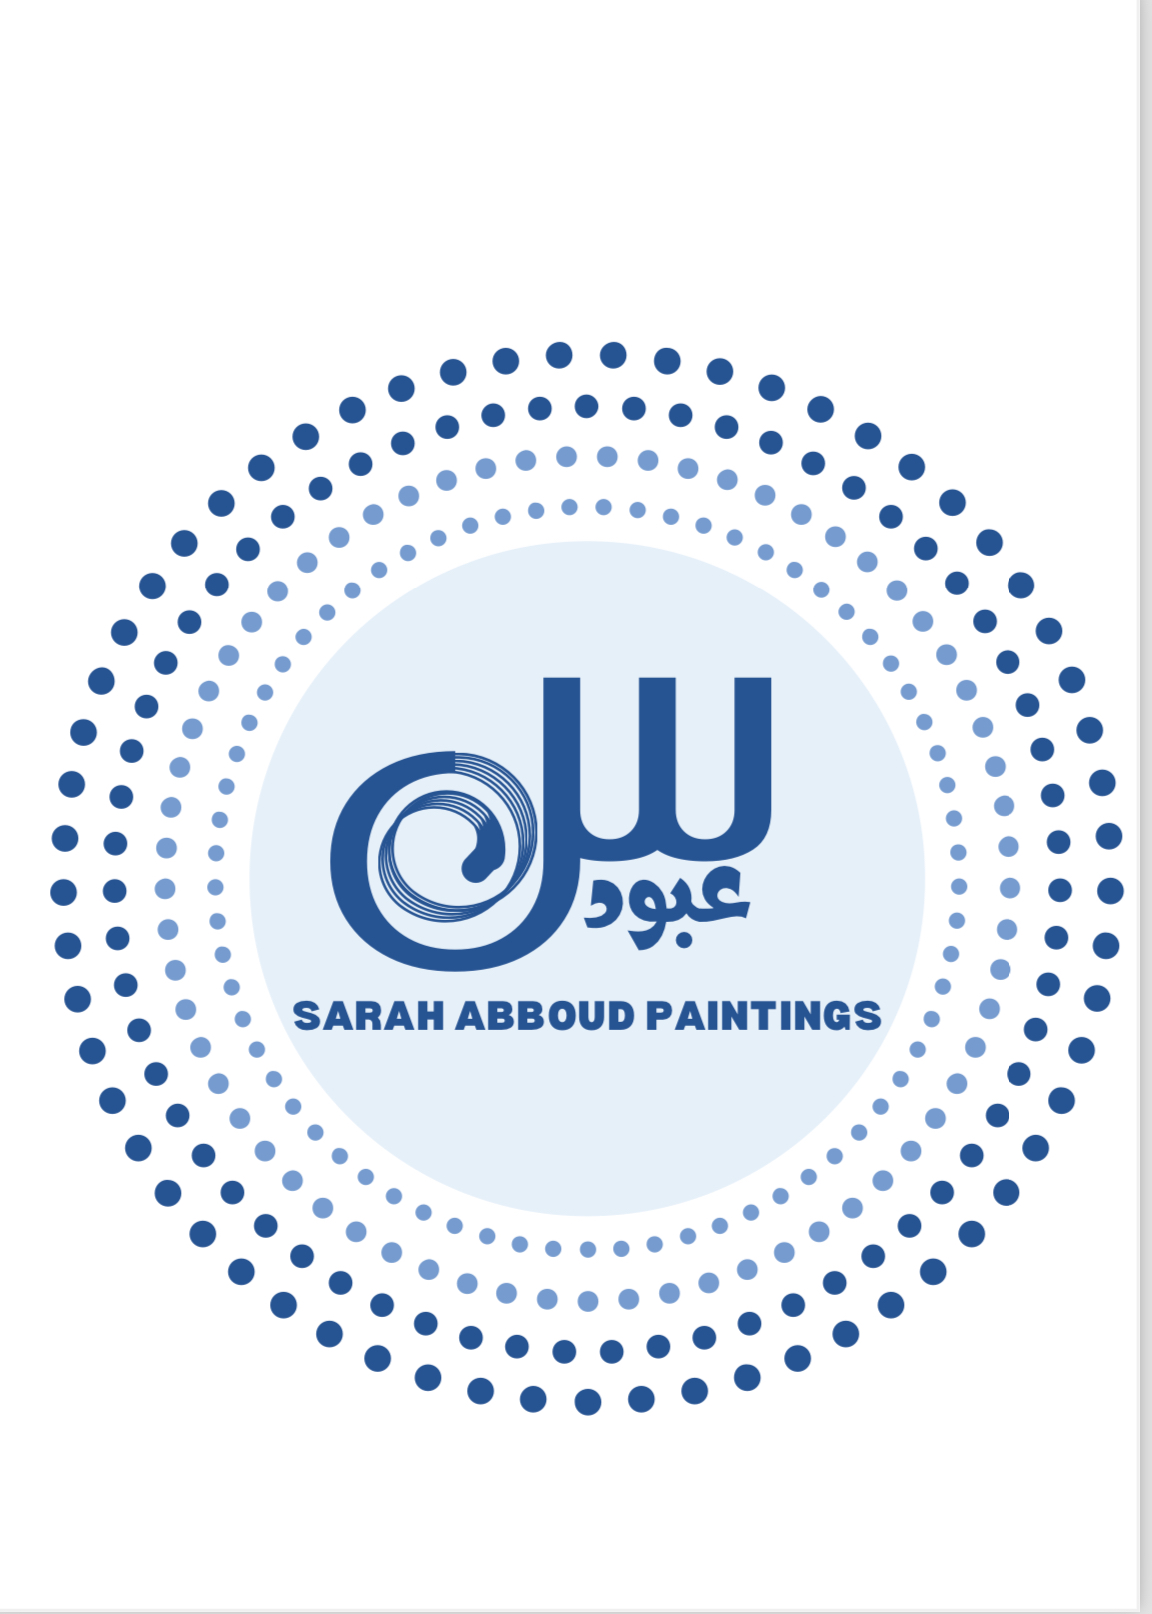 Sarah Abboud paintings_logo